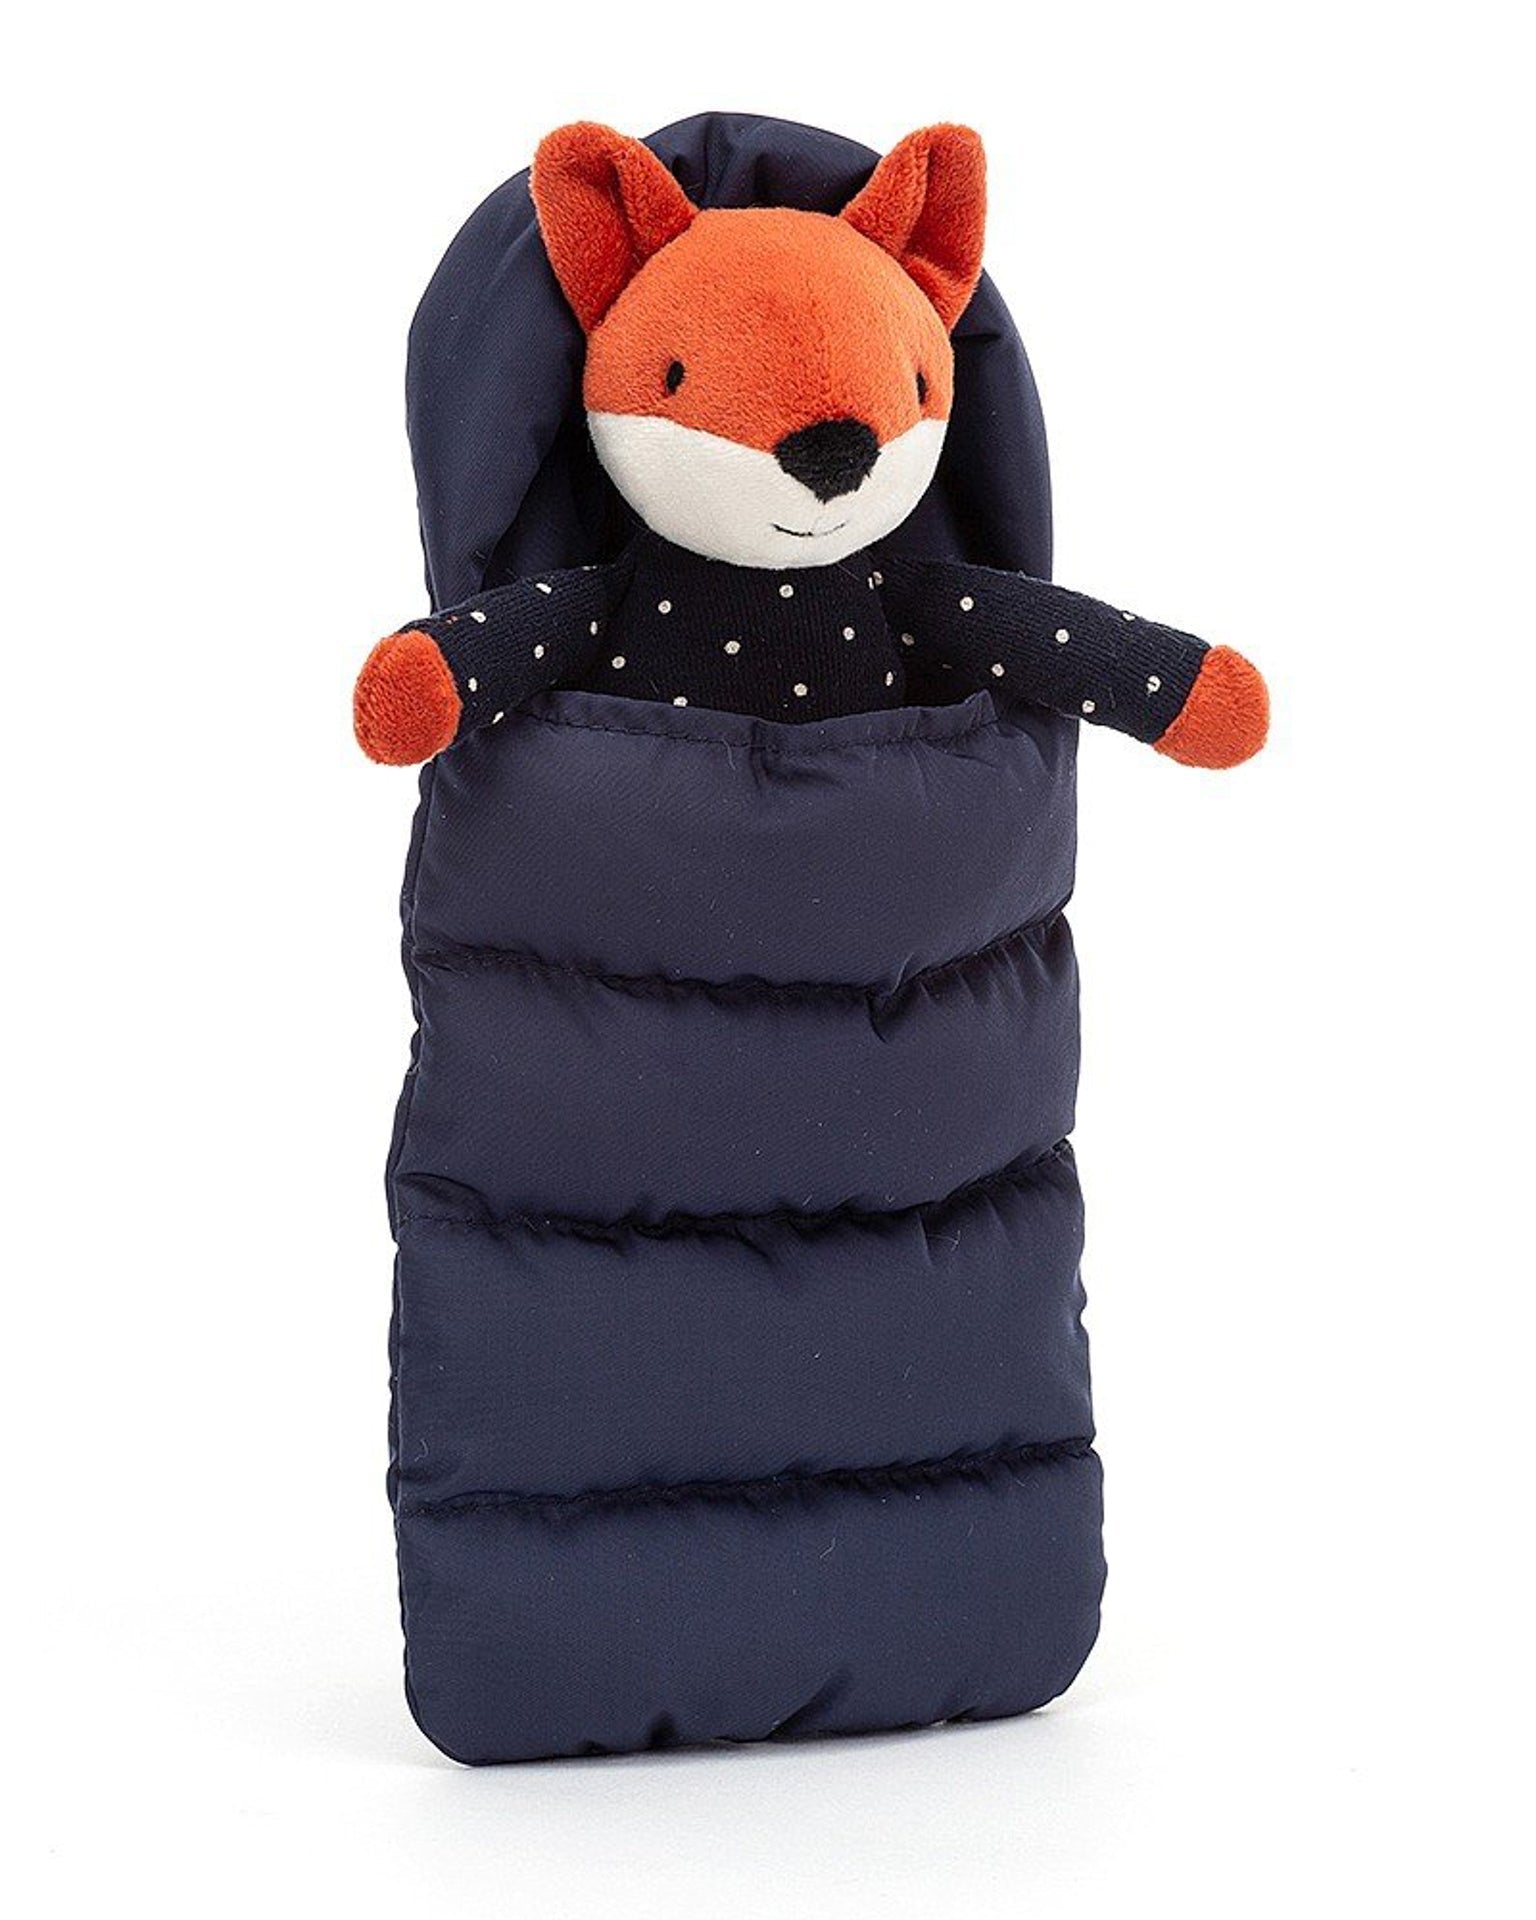 Little jellycat play sleeping bag snuggler fox